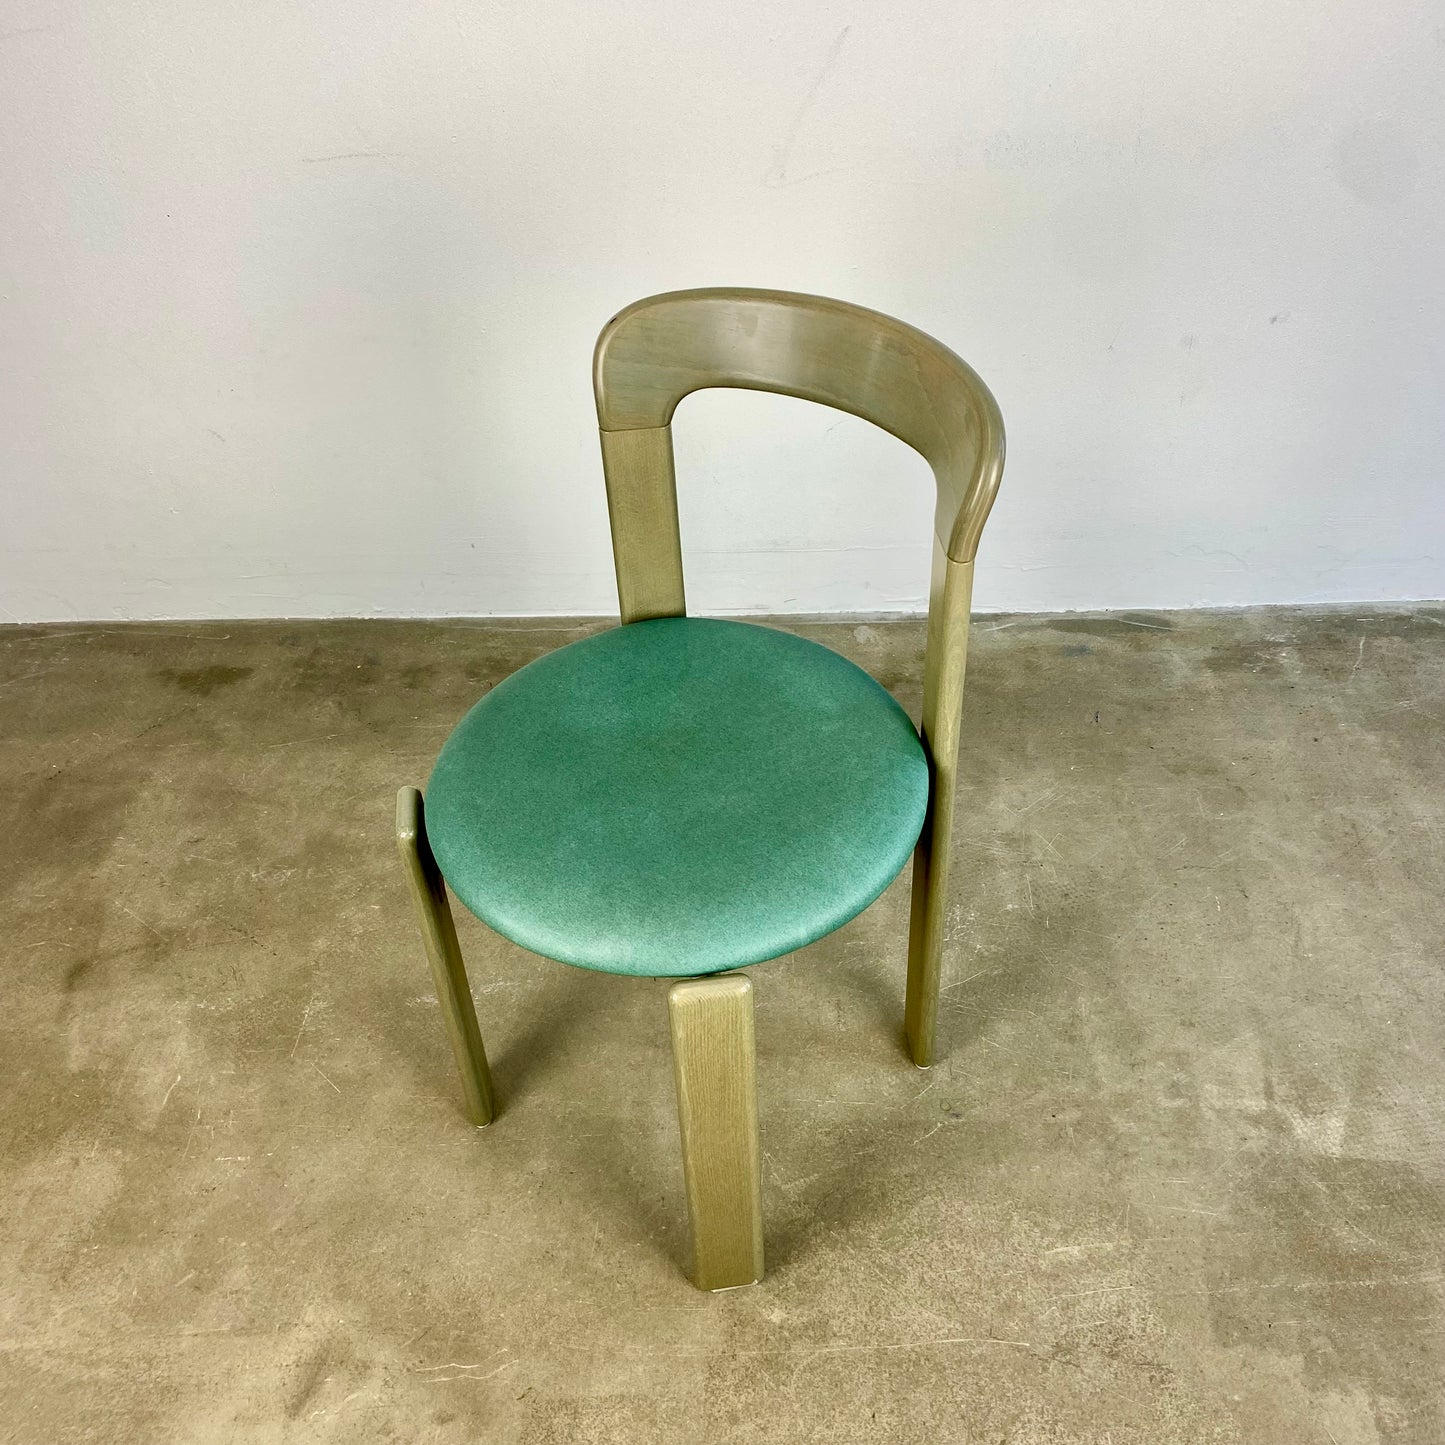 bruno-rey-chairs-by-kush-co